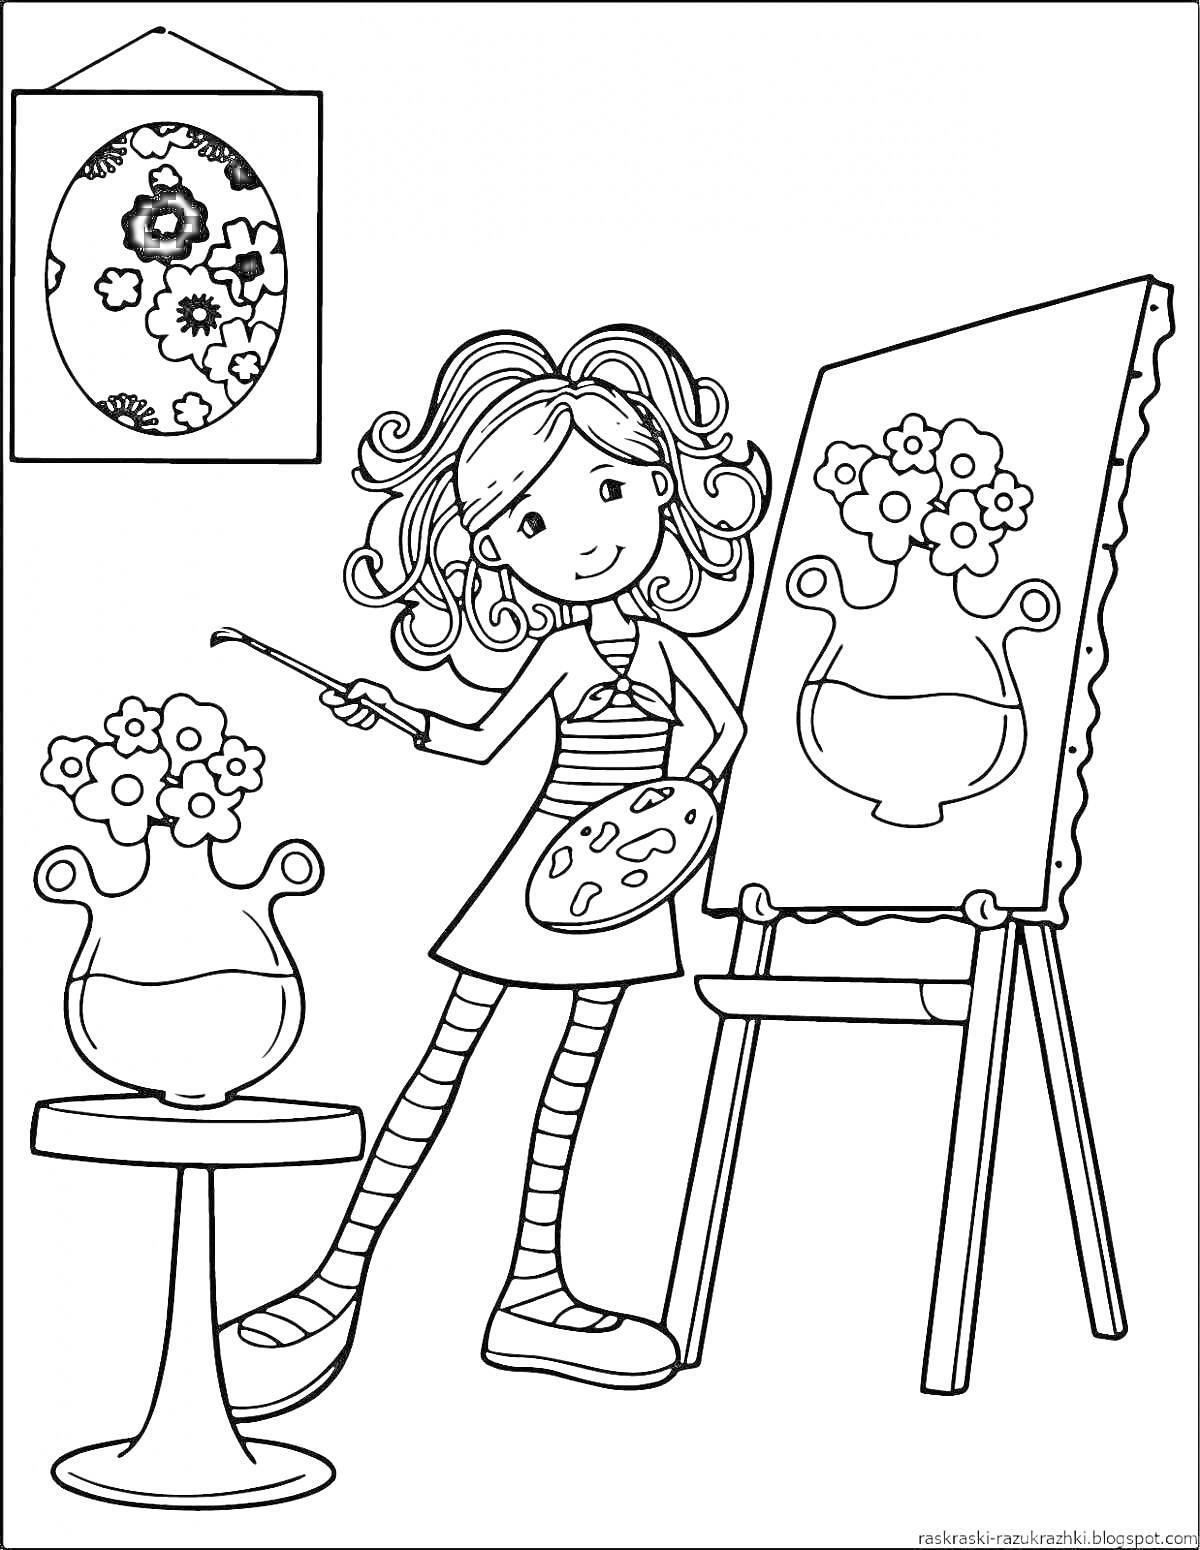 Раскраска Девочка рисует натюрморт с цветами, мольберт, картина, ваза с цветами на столике, картина с цветами на стене